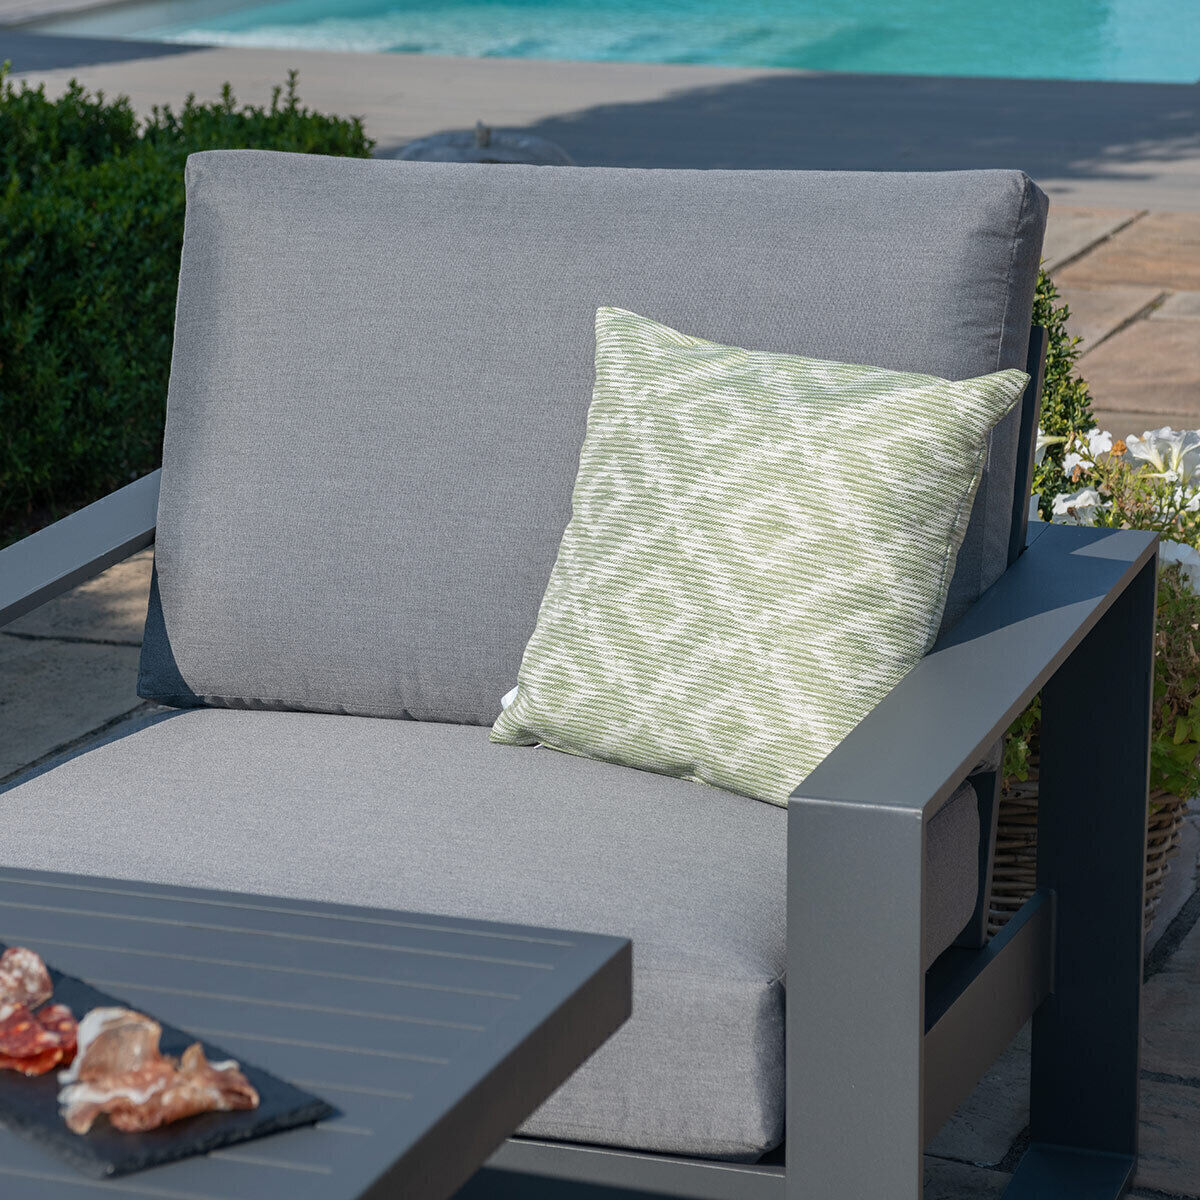 Maze - Amalfi 3 Seat Aluminium Sofa Set with Rising Table plus Armchairs & Footstools - Grey product image